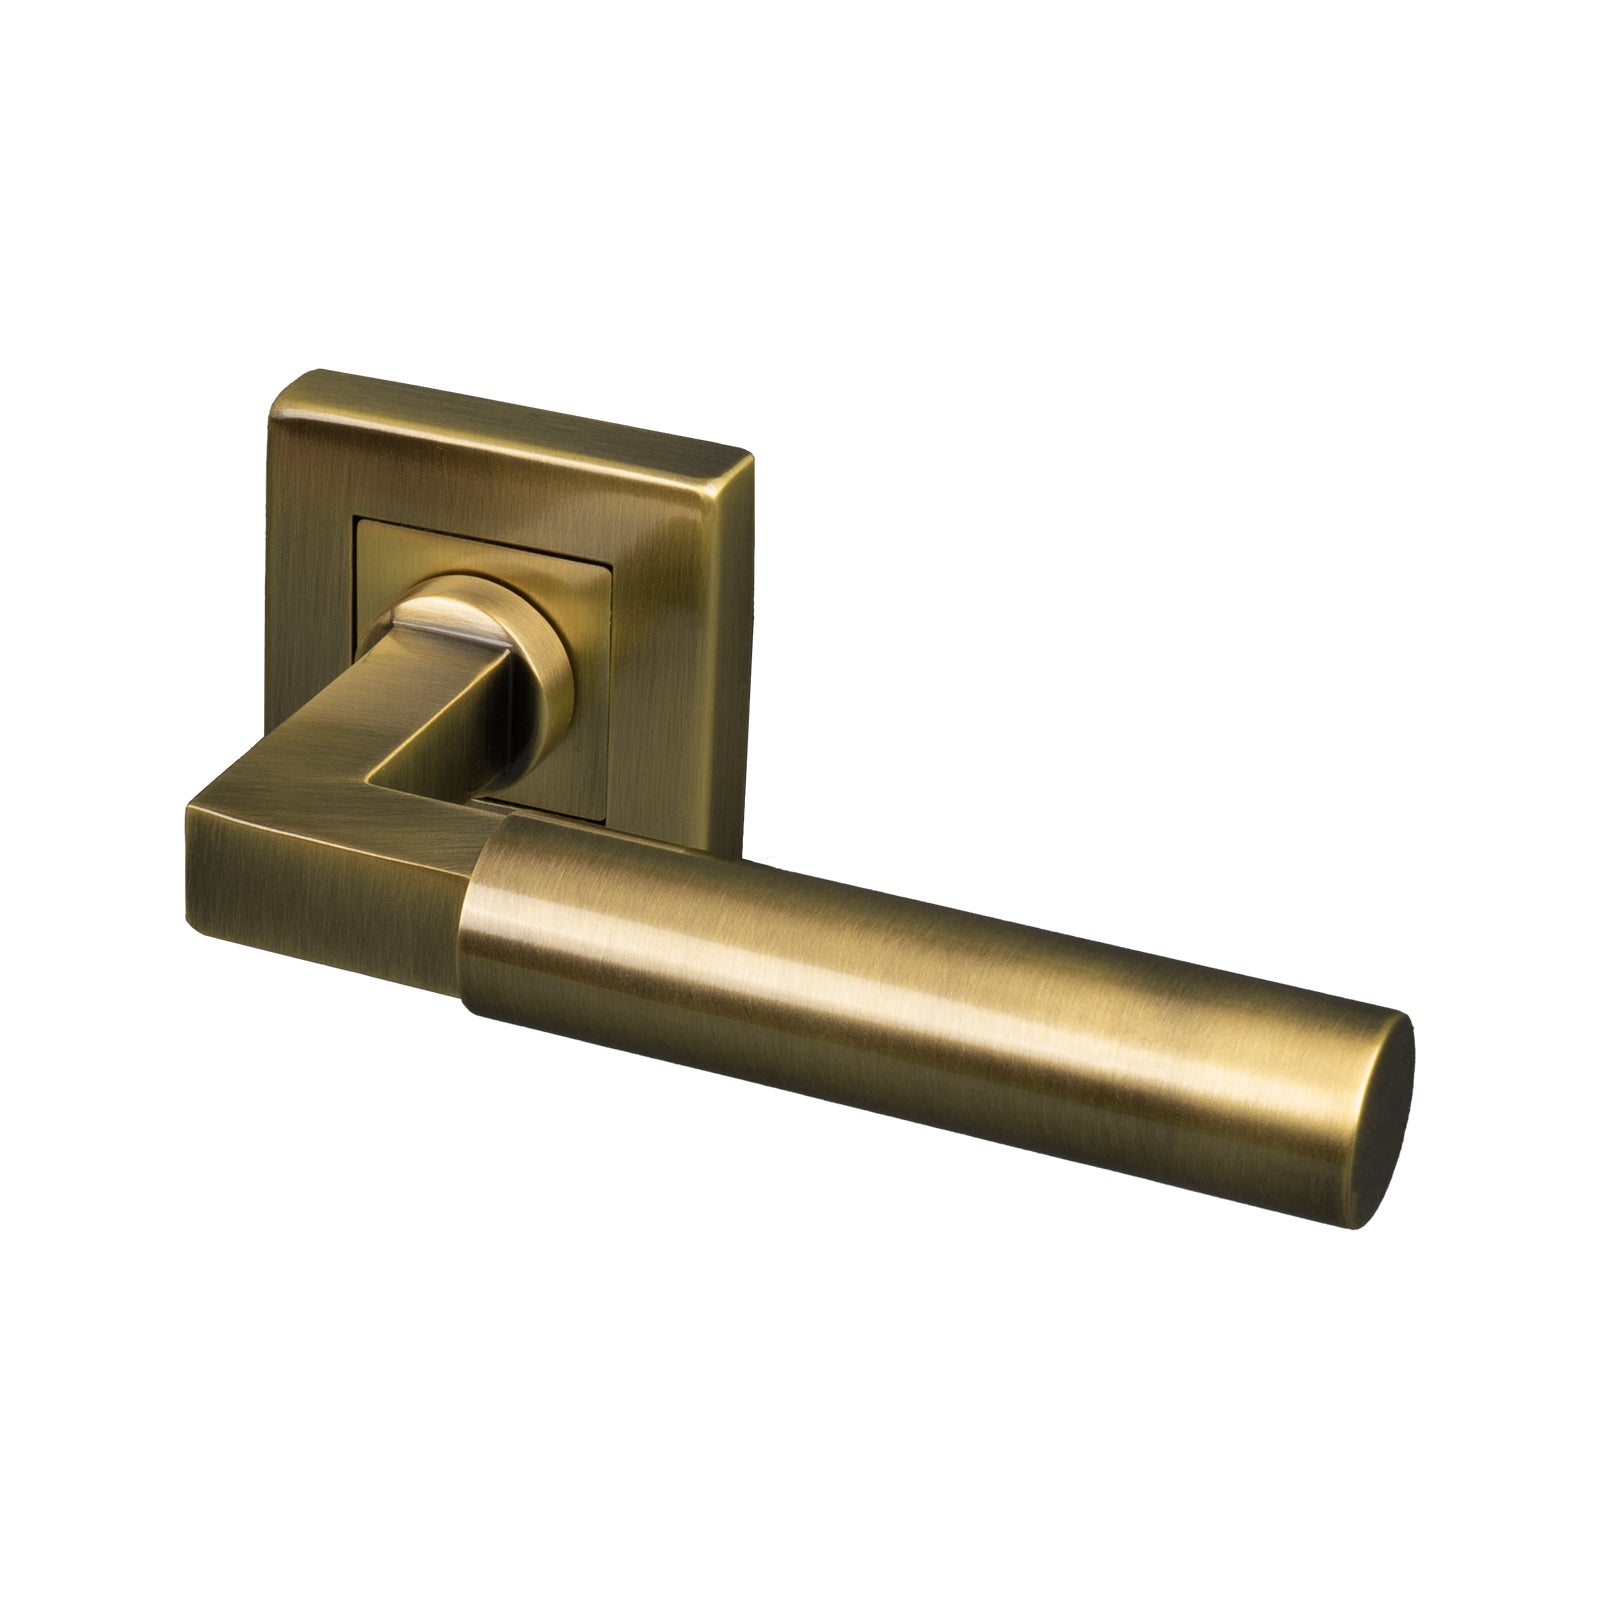 aged brass bauhaus square rose door handles, 10 year mechanical guarantee SHOW